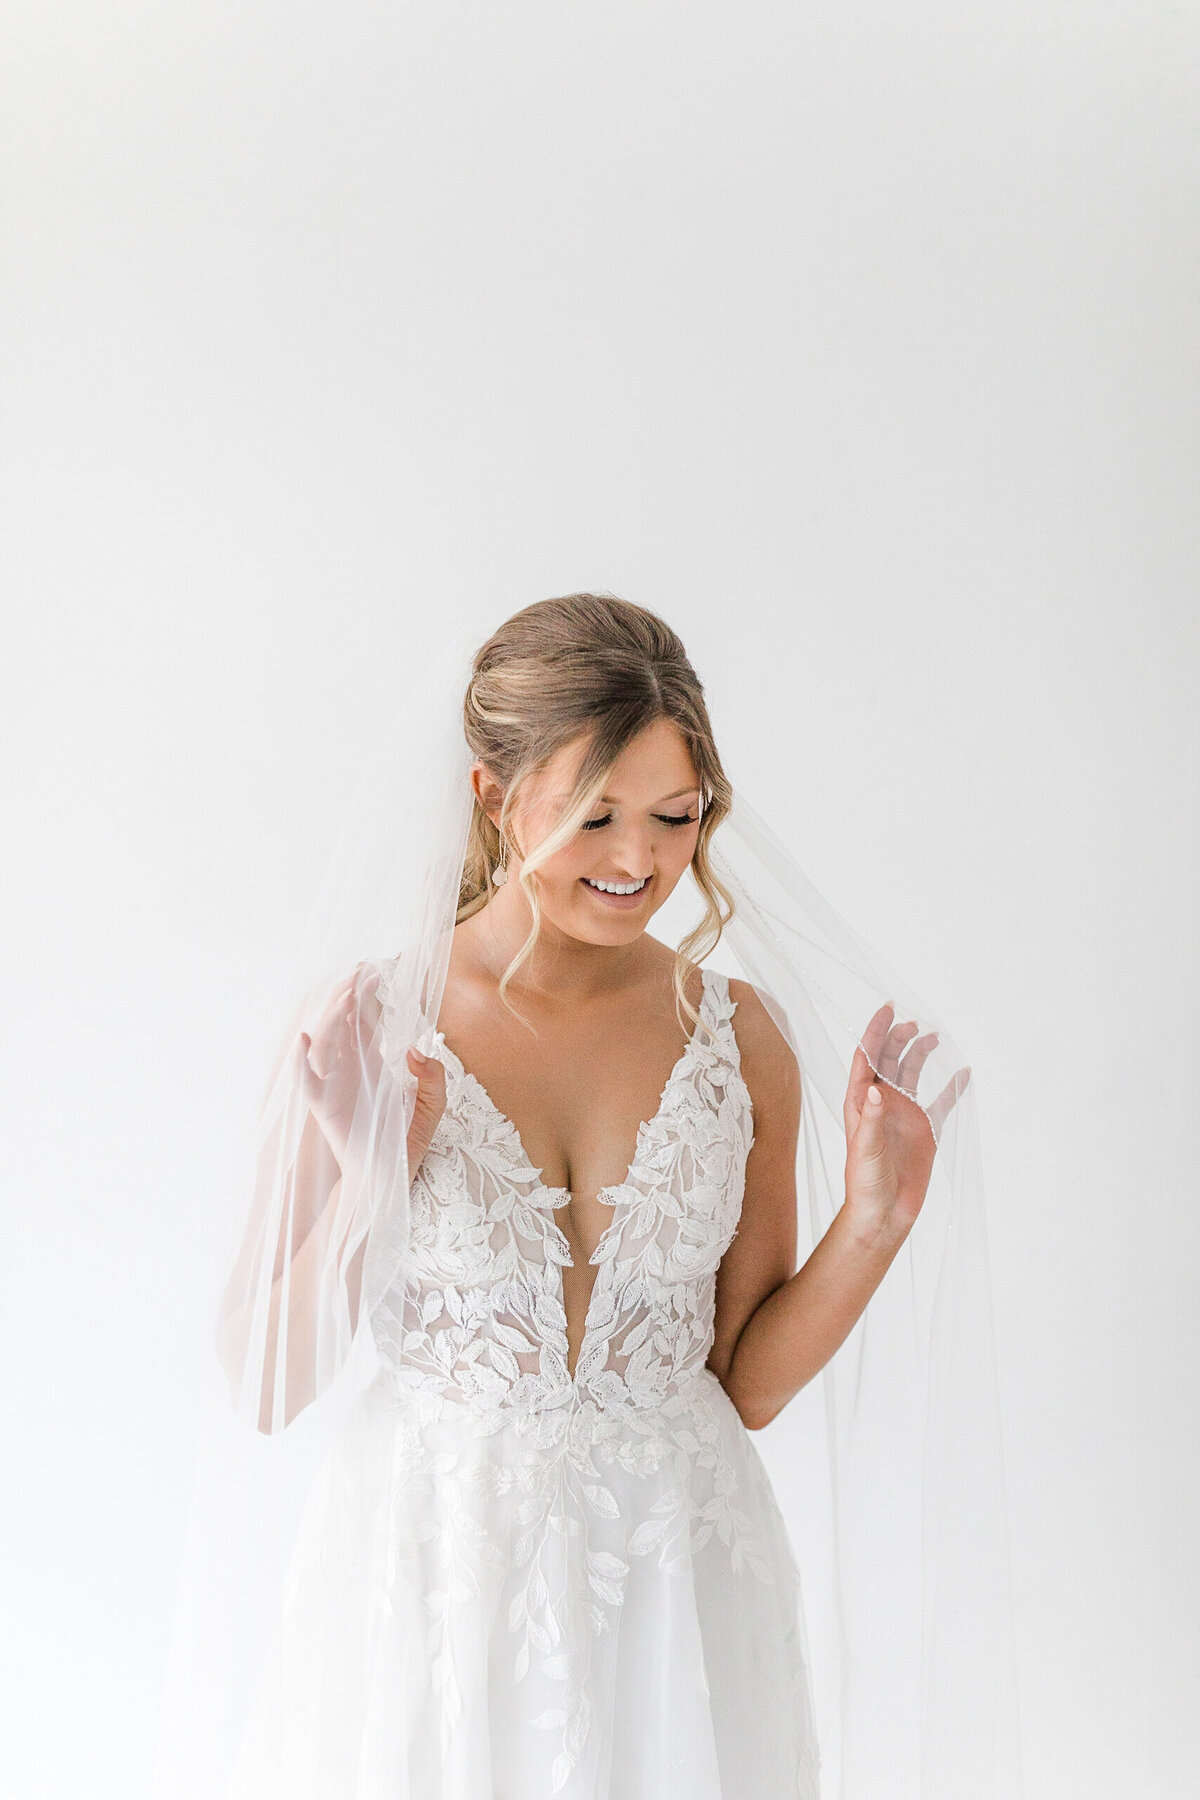 Marissa Reib Photography | Tulsa Wedding Photographer-4-7